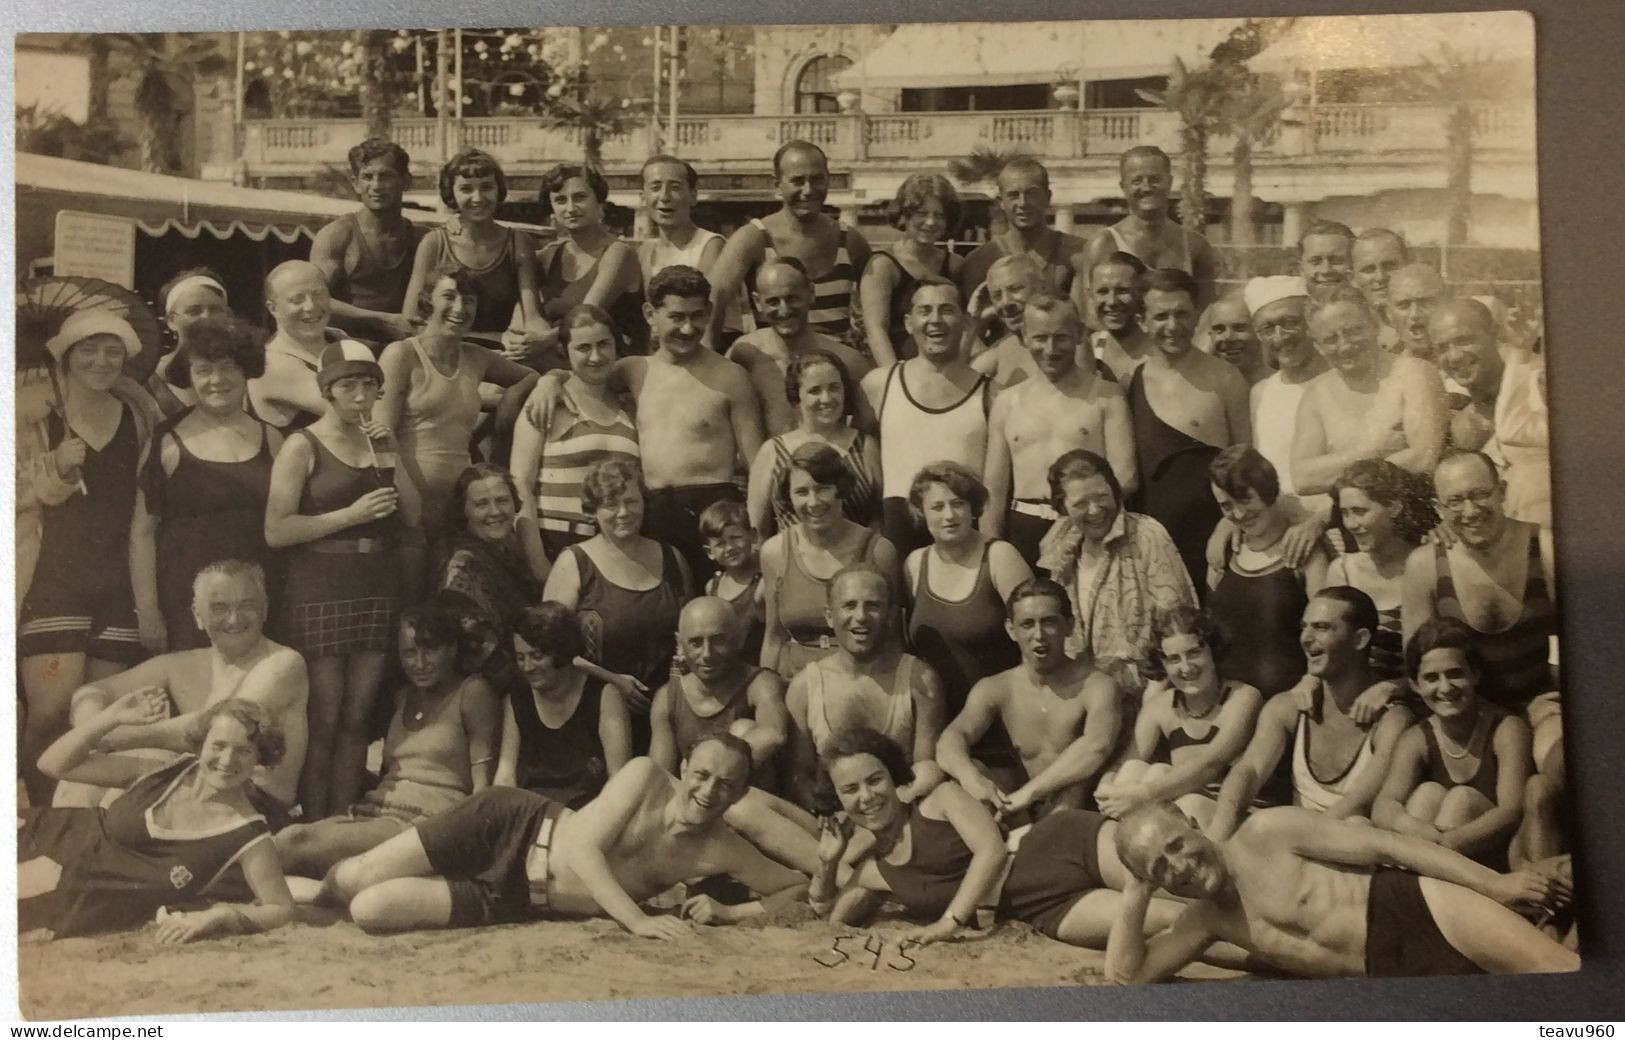 OLD POSTCARD CROATIA HRVATSKA OPATIJA SLIKANO NA PLAZI YOUNG MEN AND WOMEN IN SWIMSUITS FOTO REAL PHOTO AK 1926 - Kroatië